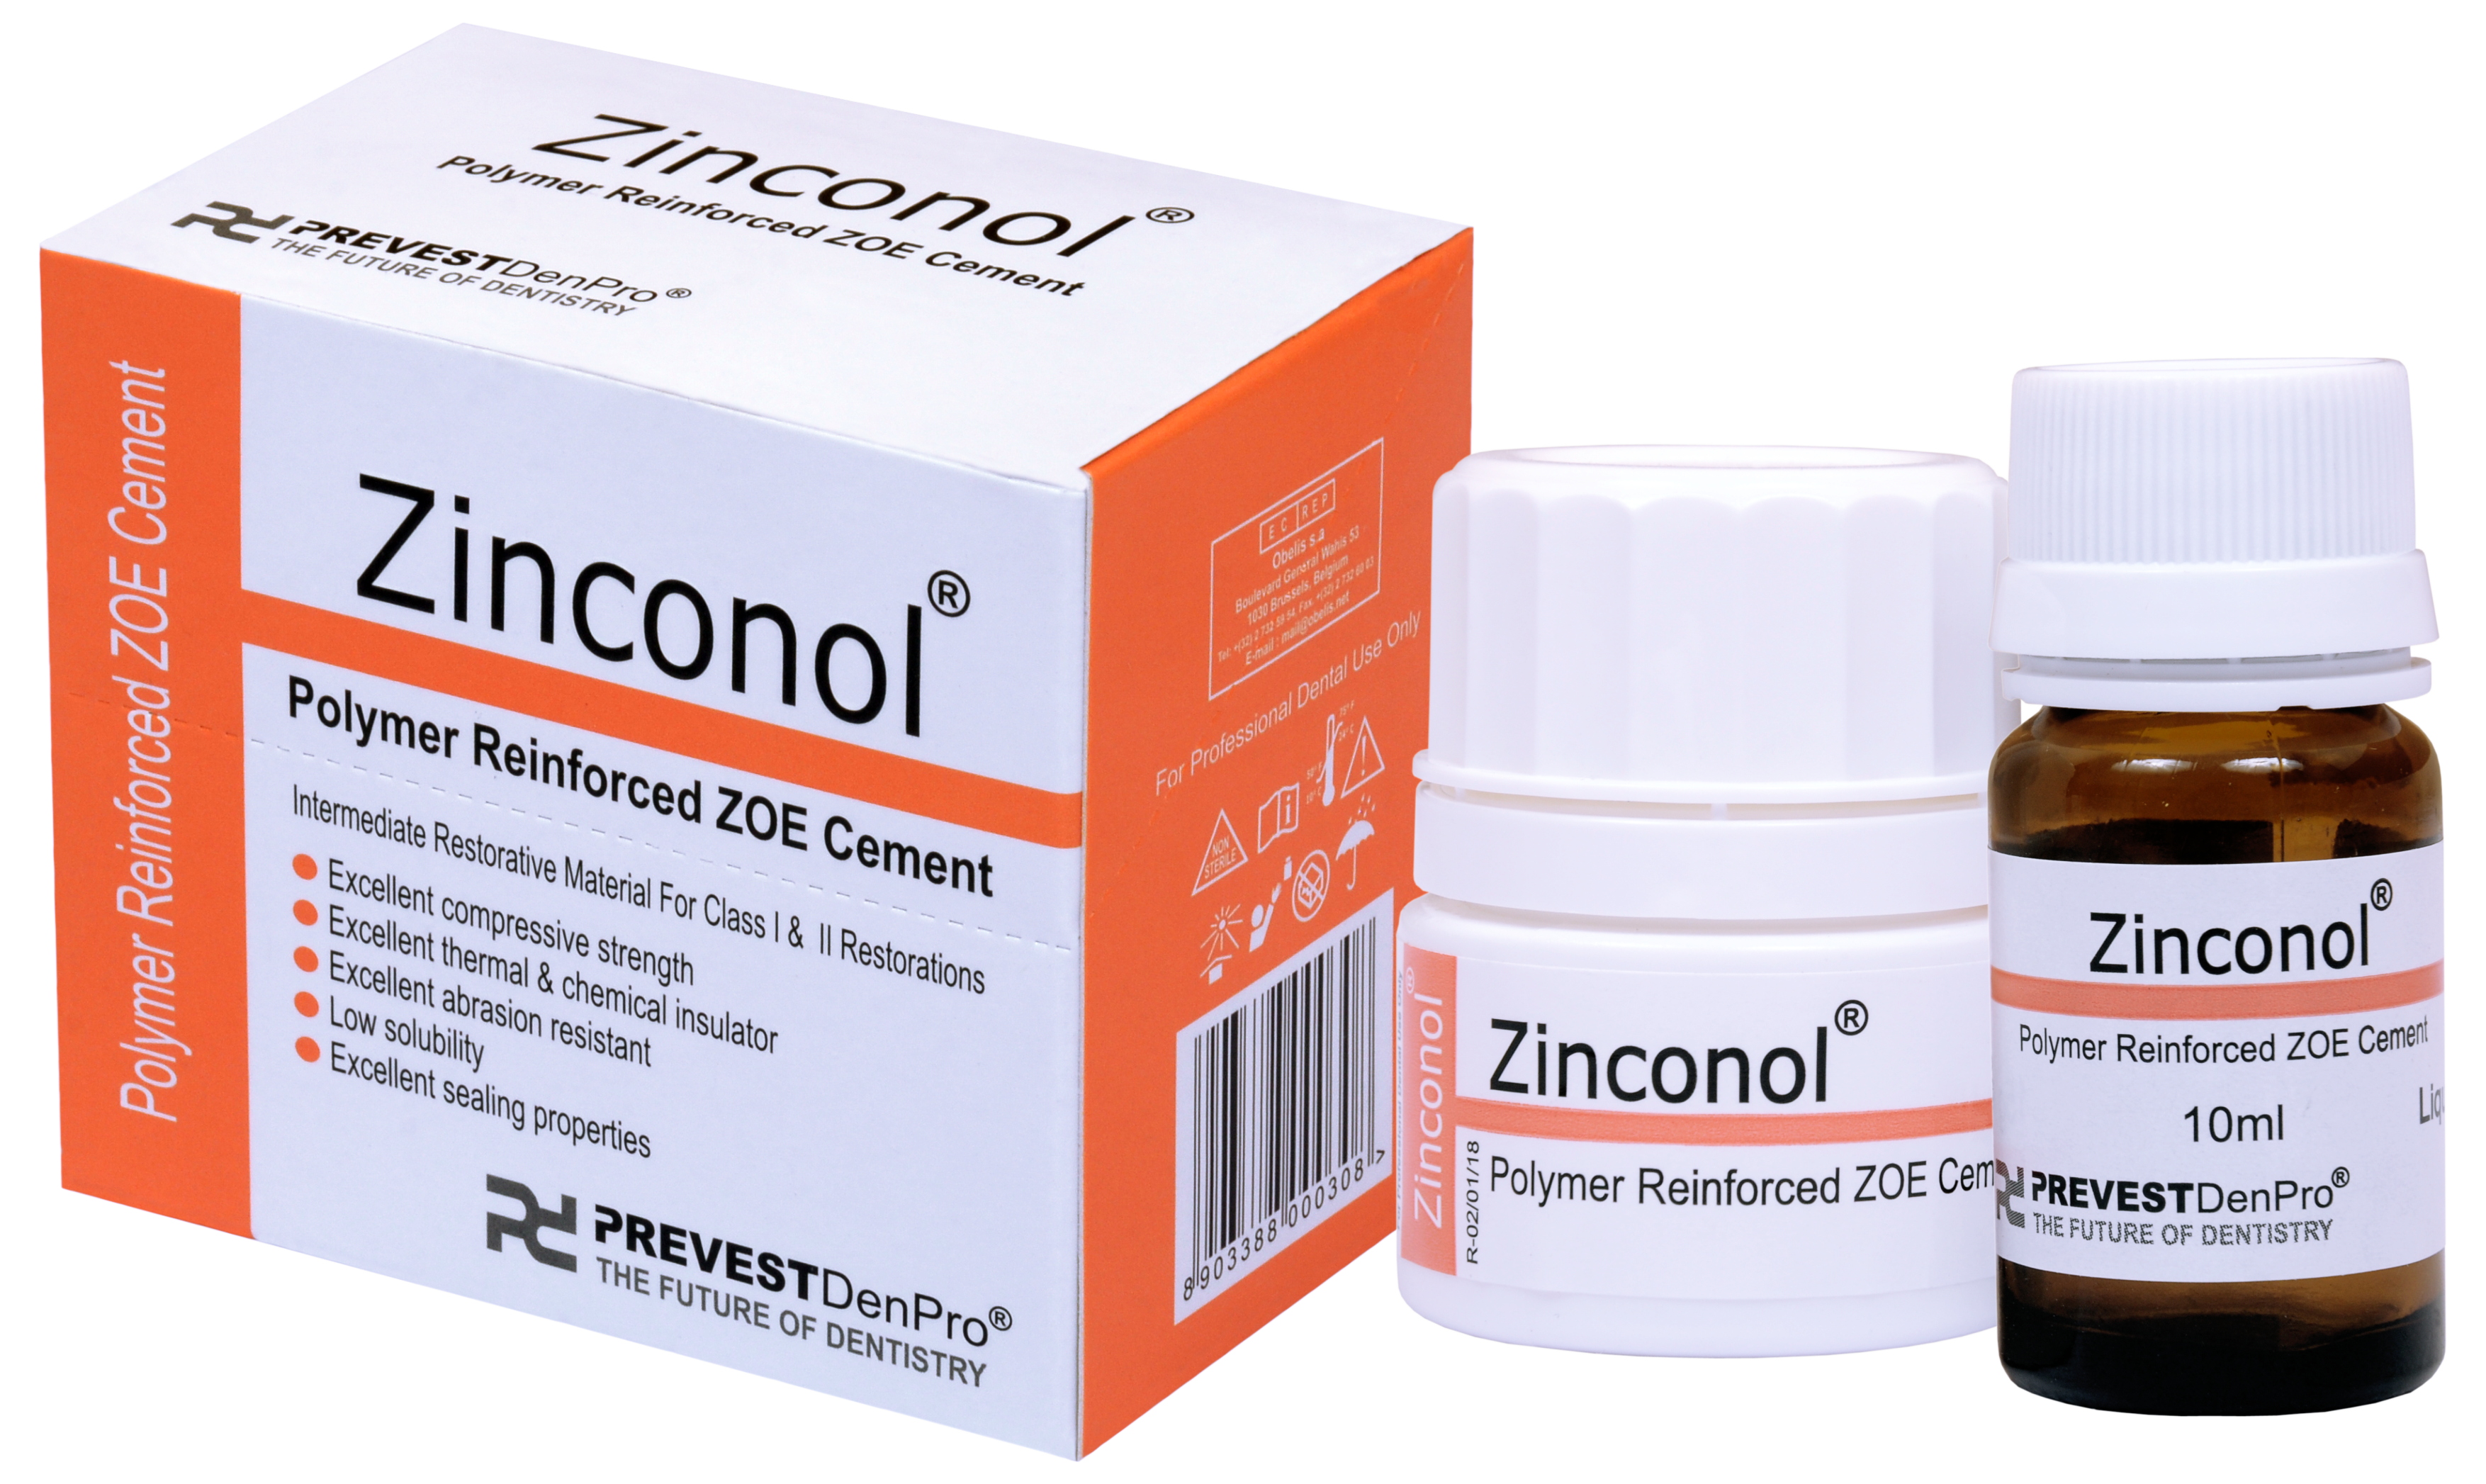 IRM Zinconol (Polymer Reinforced ZOE Cement)